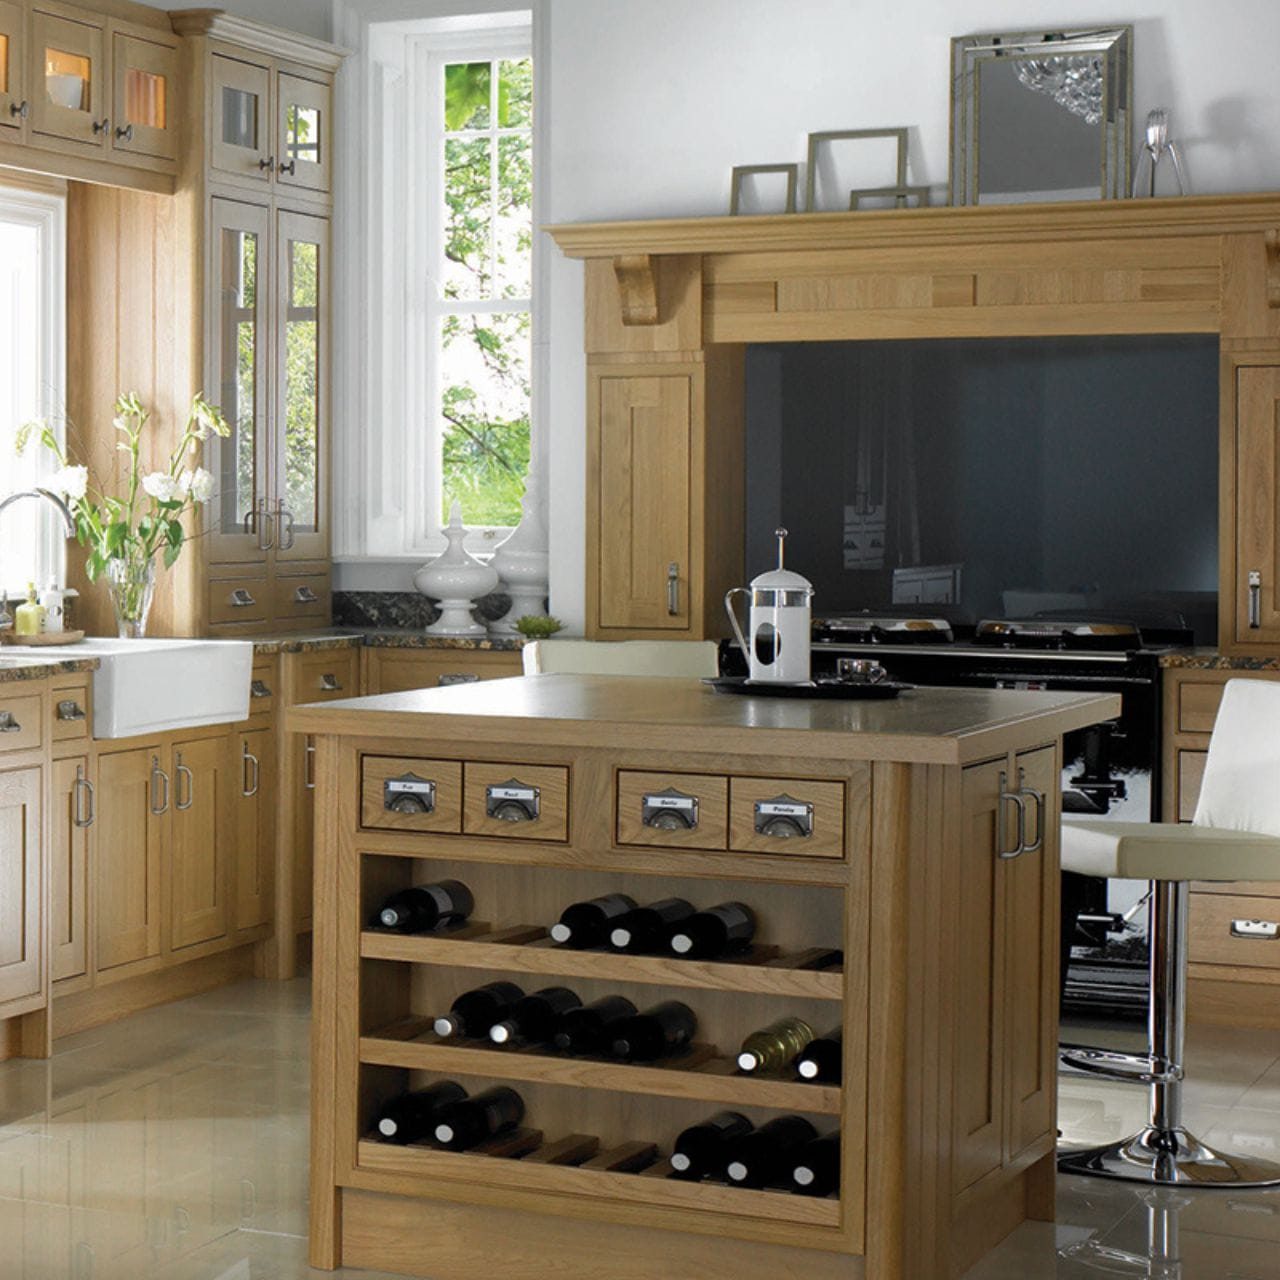 Classic Interiors wood kitchen (1)